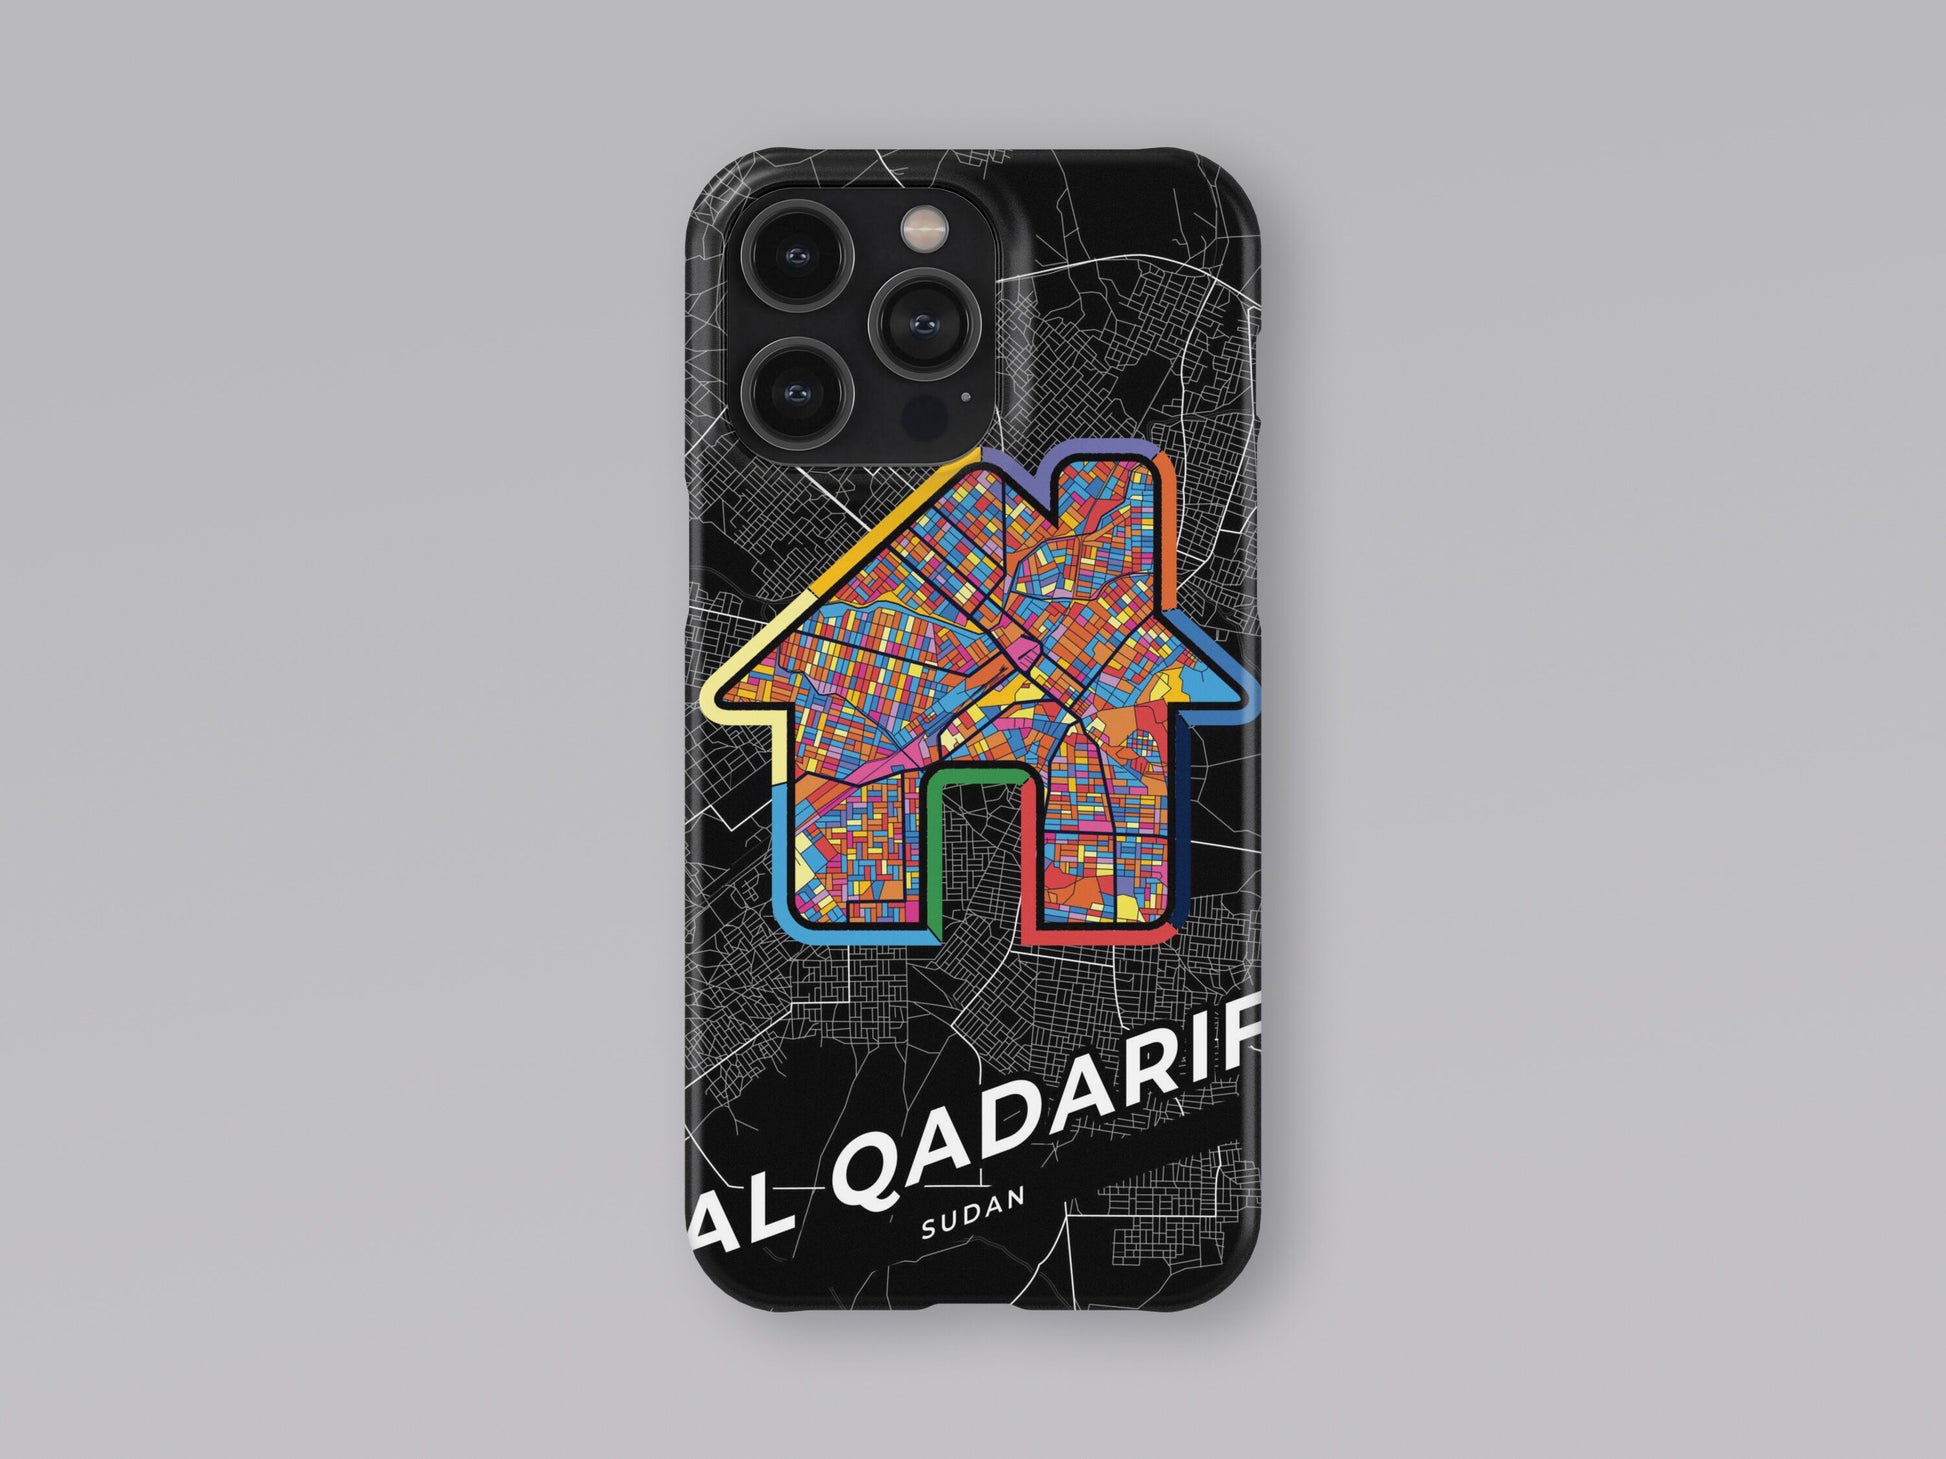 Al Qadarif Sudan slim phone case with colorful icon. Birthday, wedding or housewarming gift. Couple match cases. 3